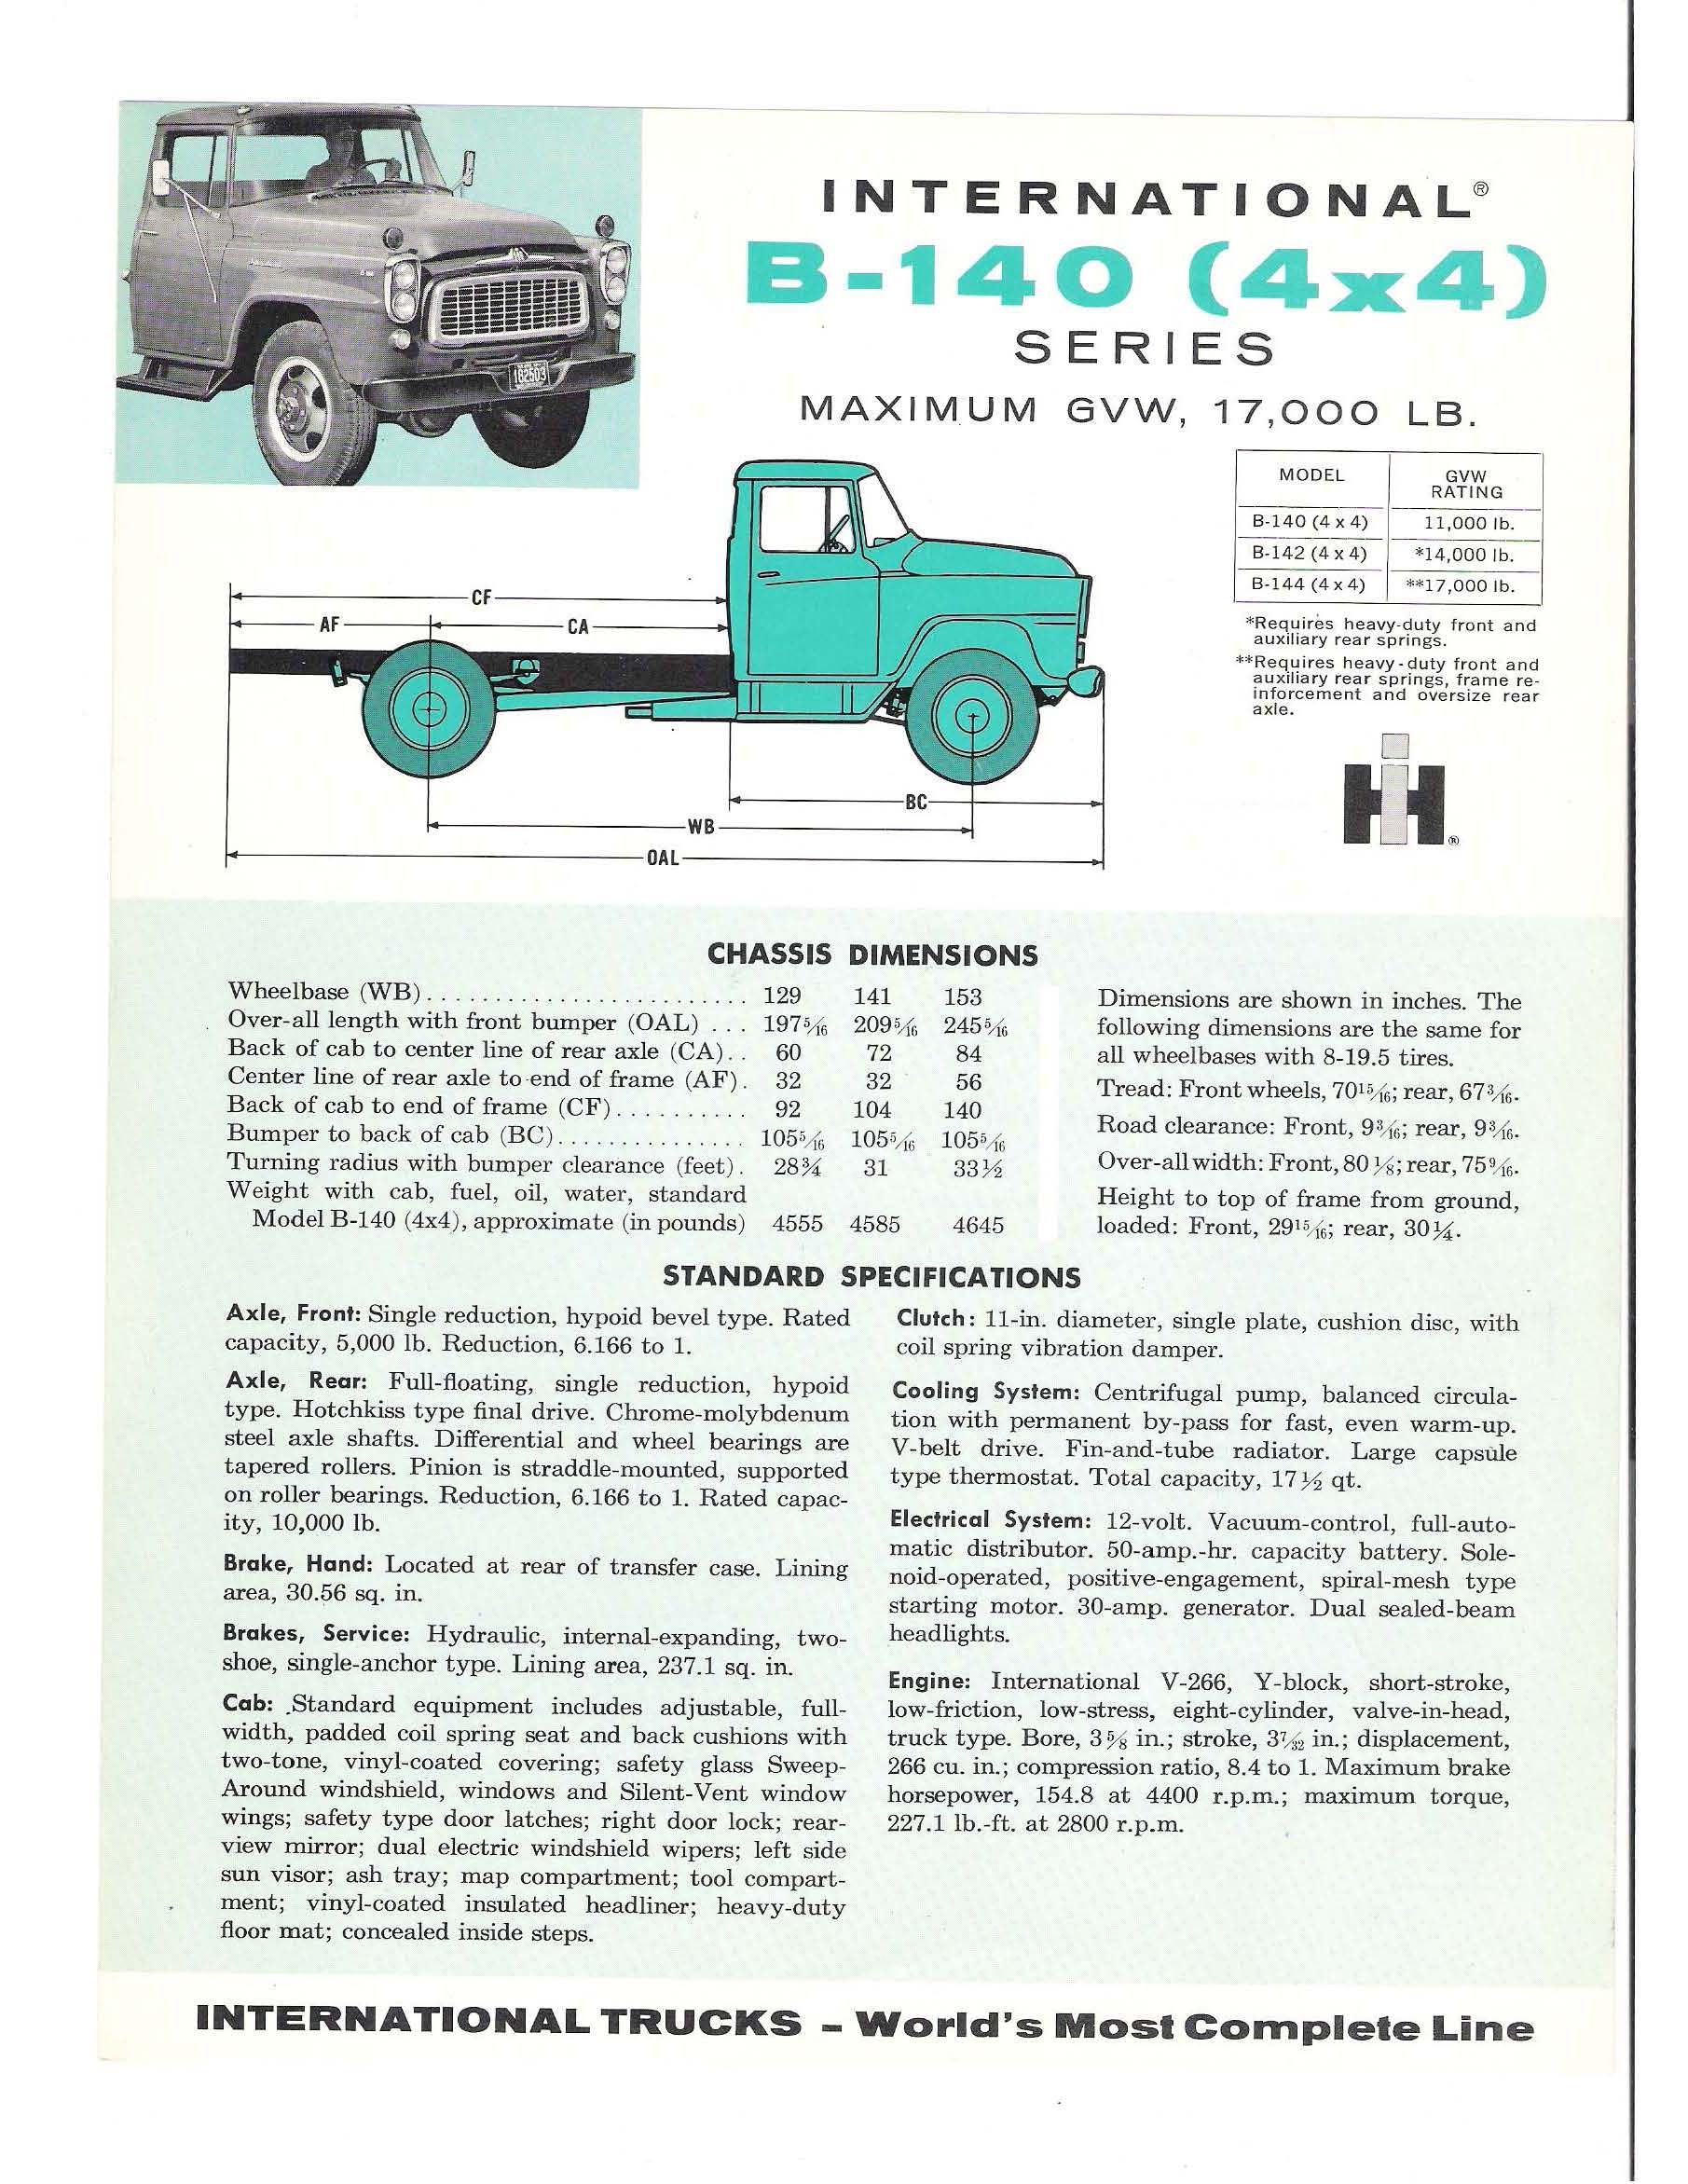 1959 International B-140 4X4 Series